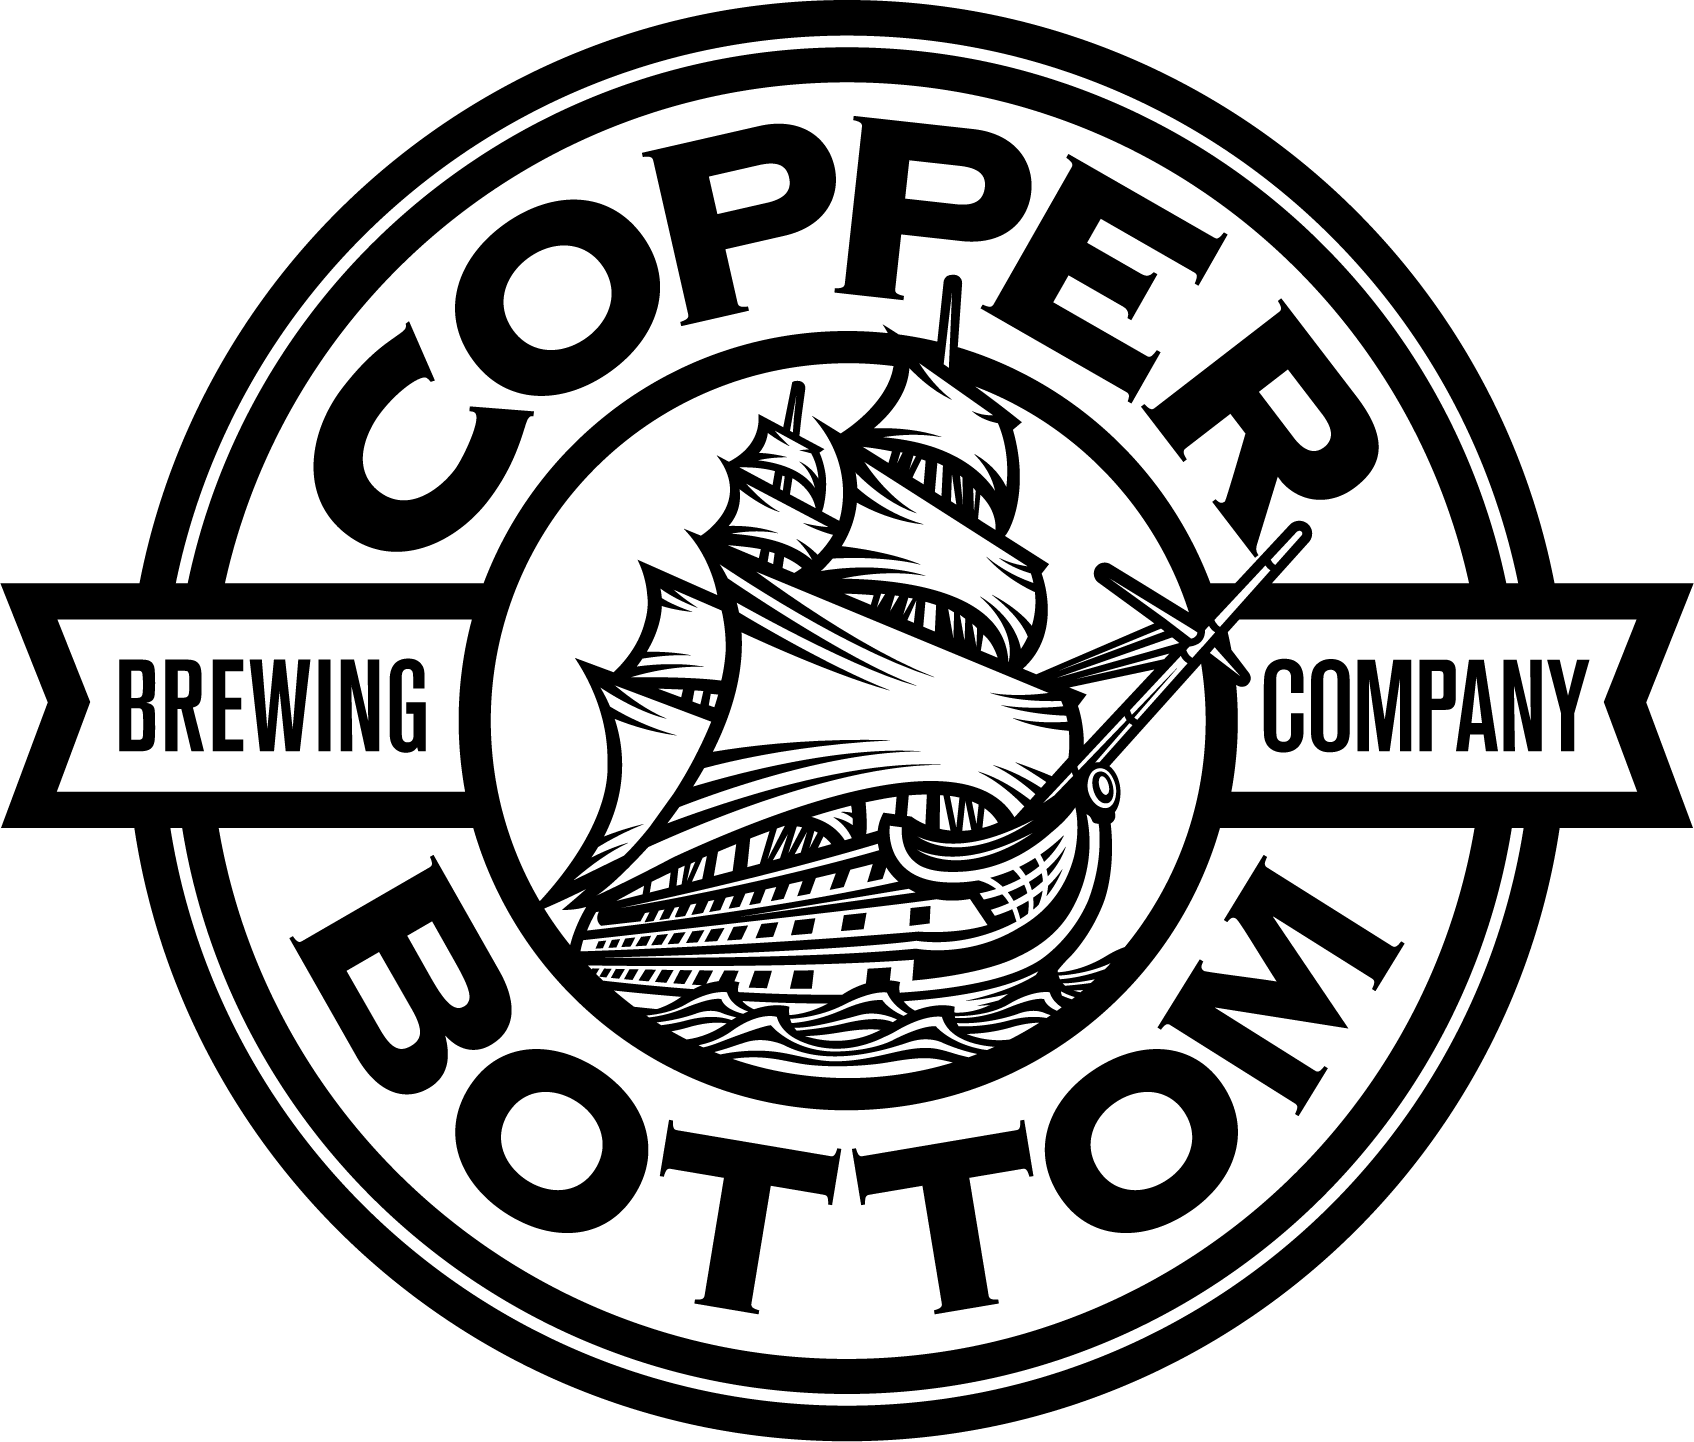 Copper Bottom Brewing